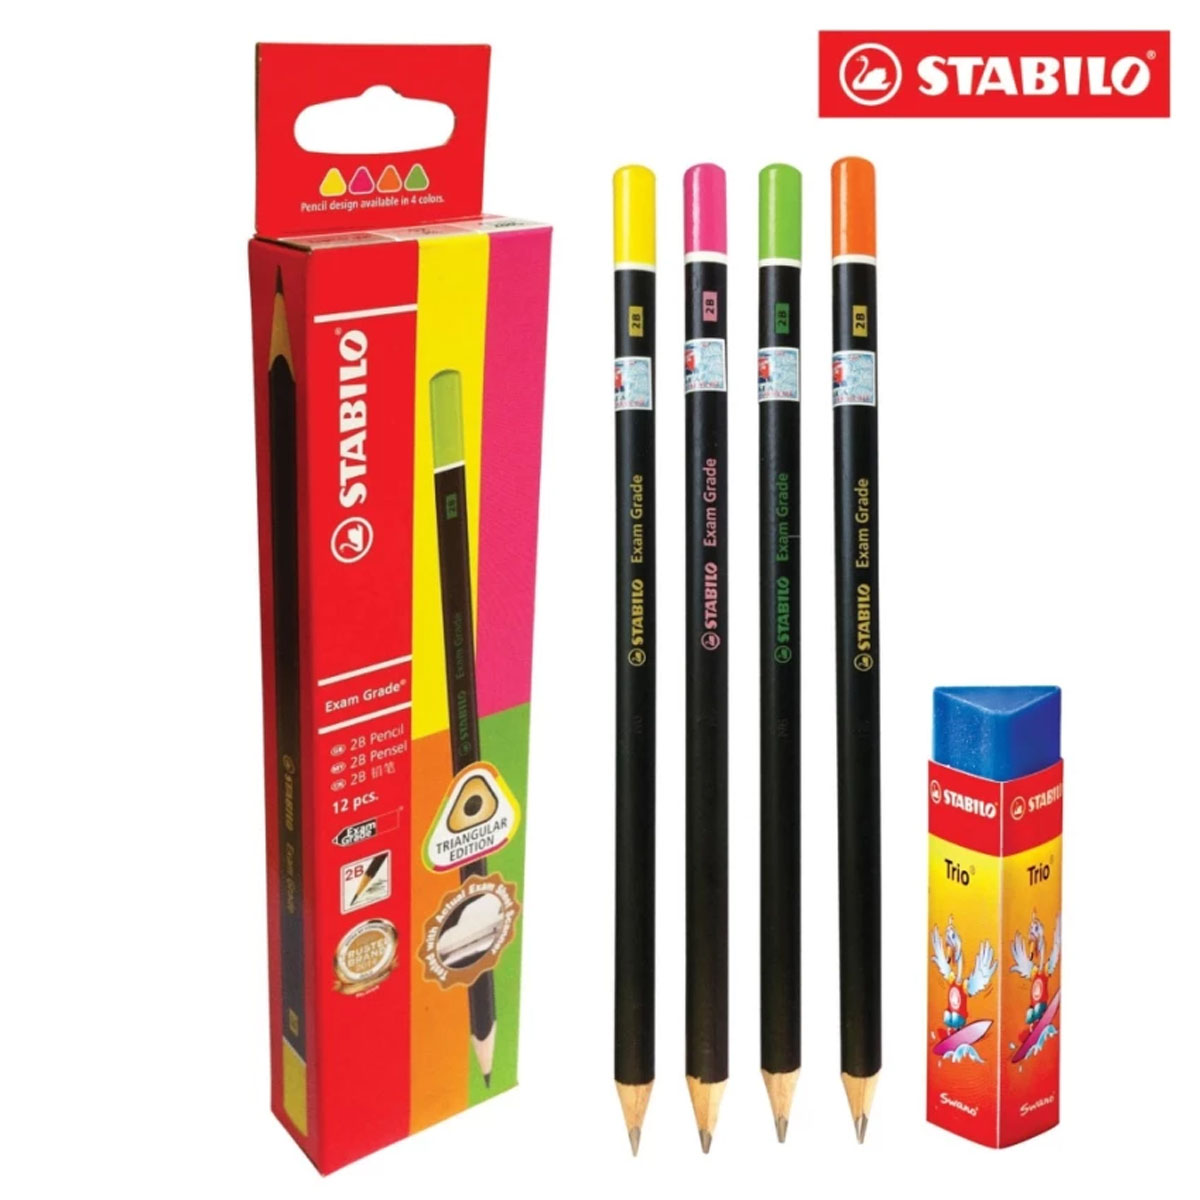 Bộ 12 cây bút chì gỗ STABILO Exam Grade PC288T